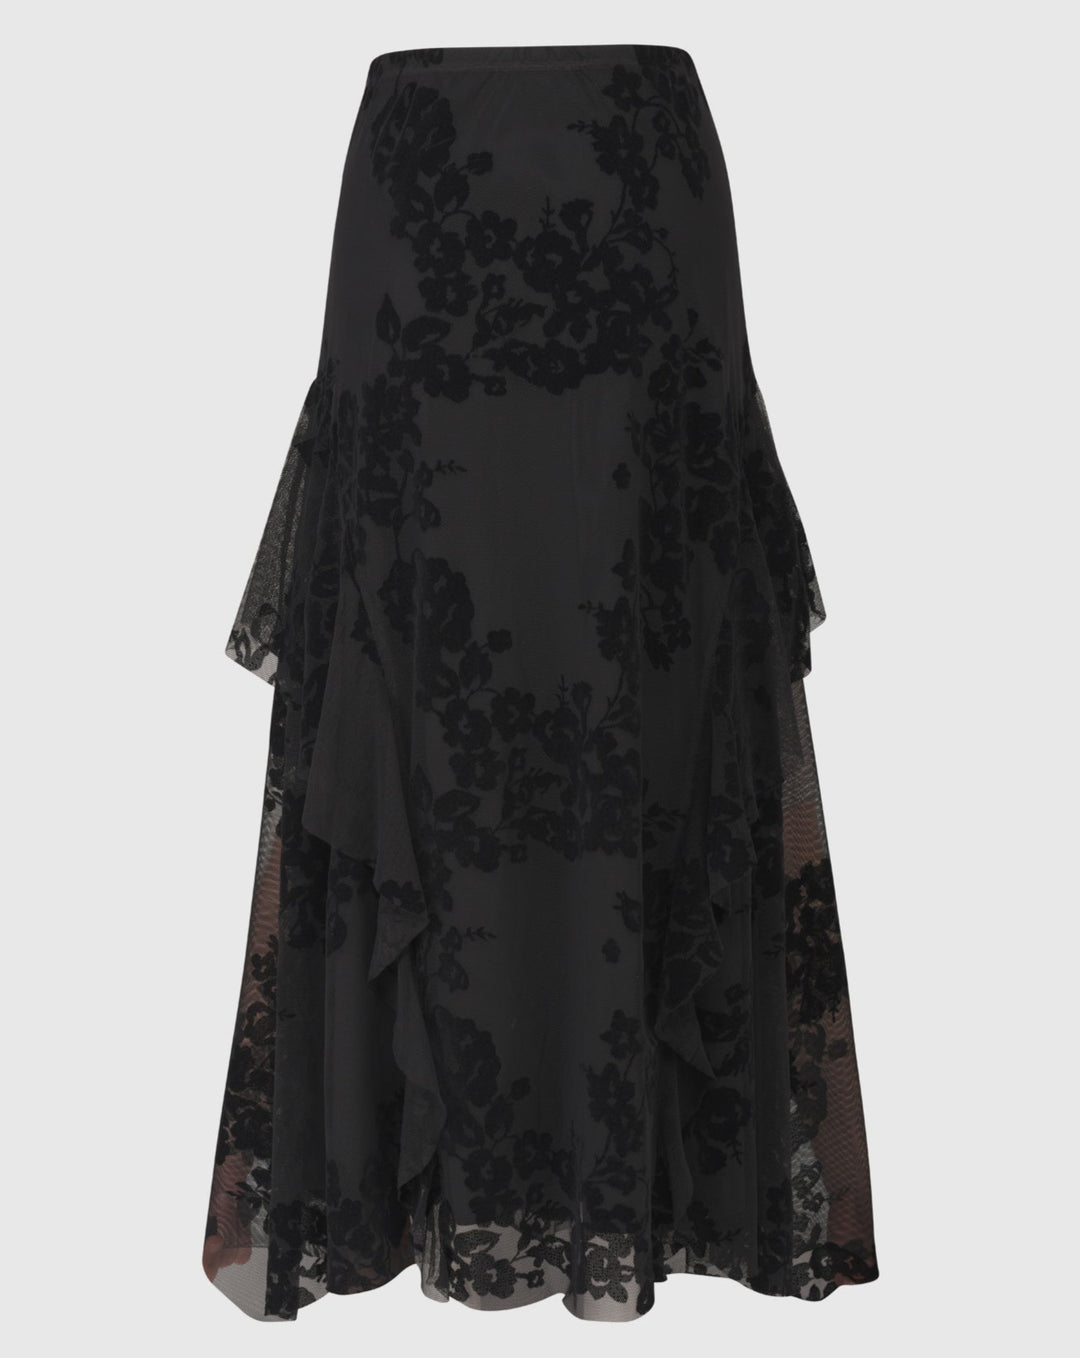 Lace Cascade Ruffle Skirt, Black